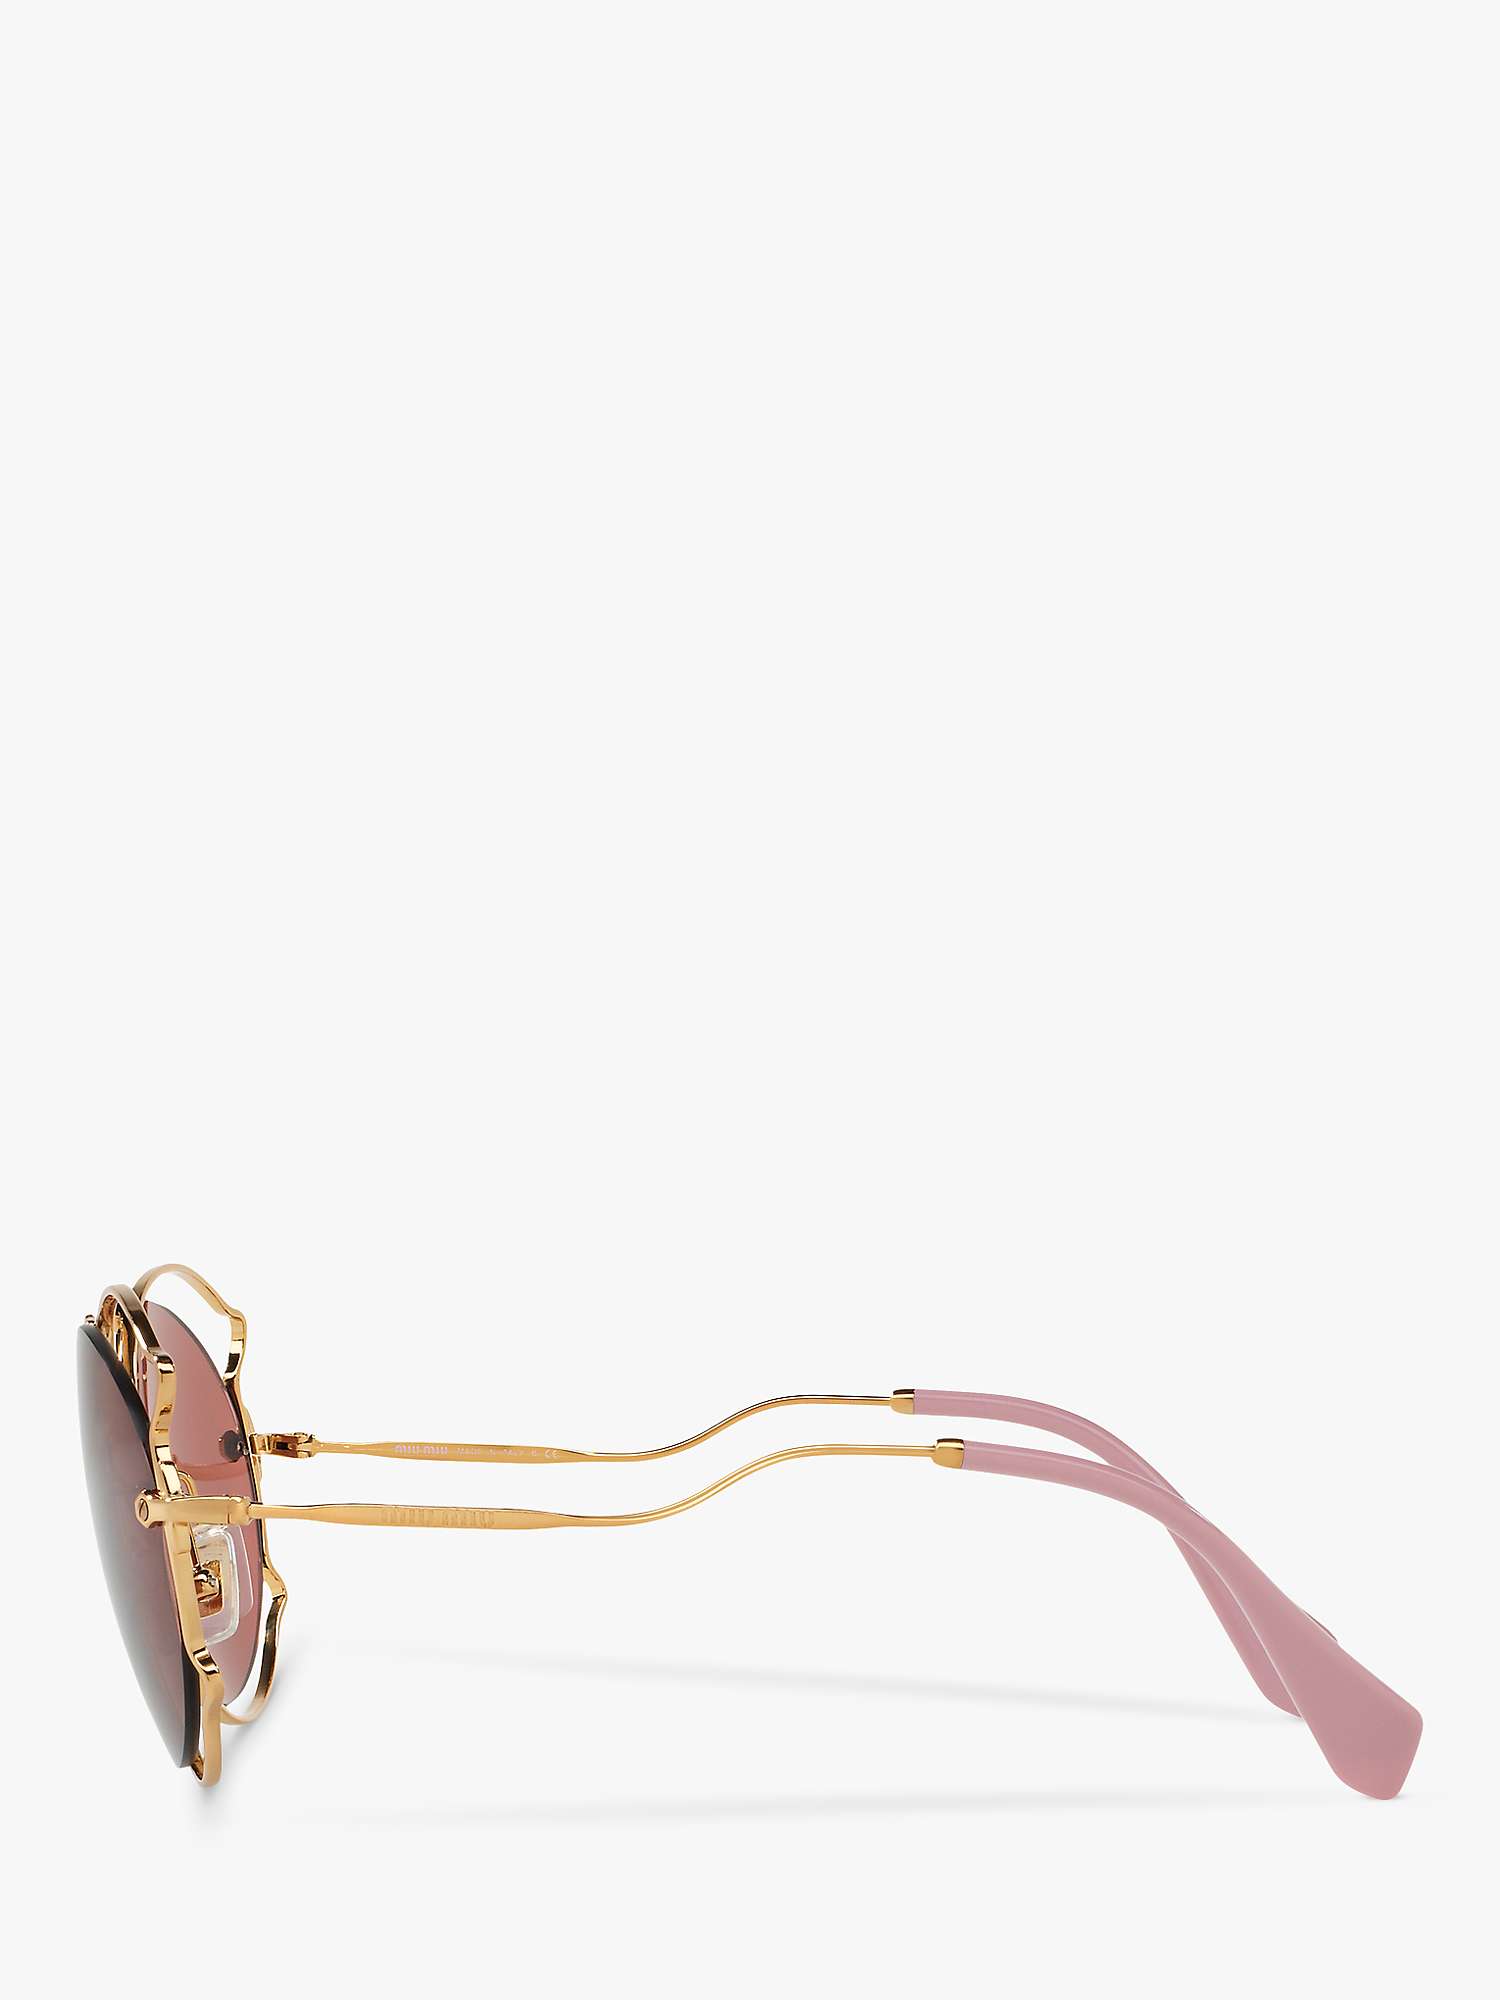 Buy Miu Miu MU 50SS Women's Irregular Sunglasses, Antique Gold/Purple Online at johnlewis.com